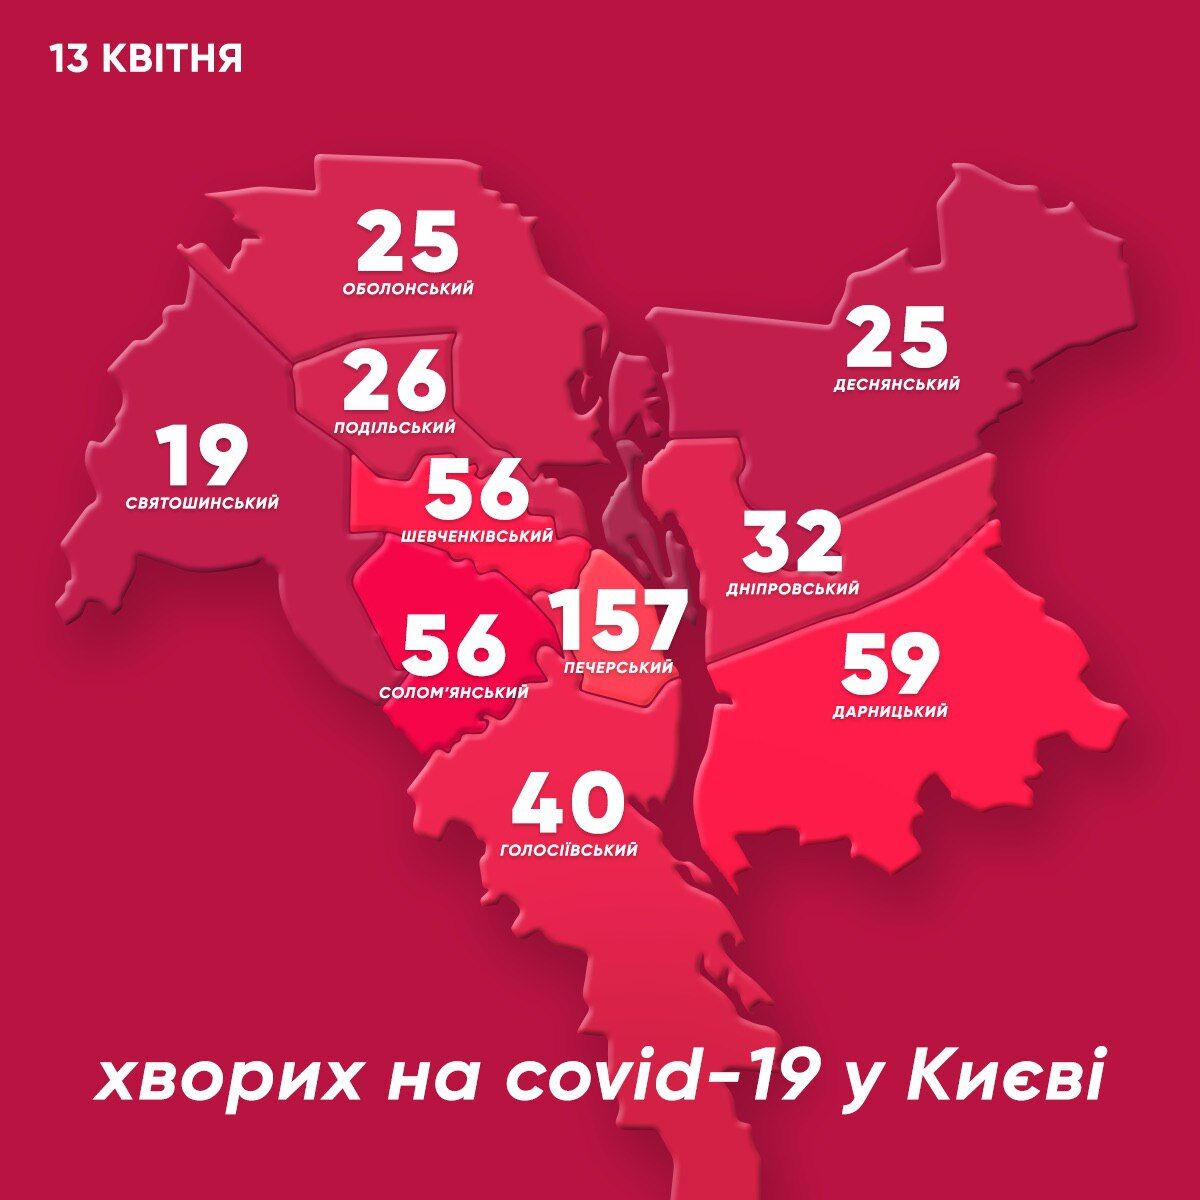 Статистика заболеваемости коронавирусрм в Киеве